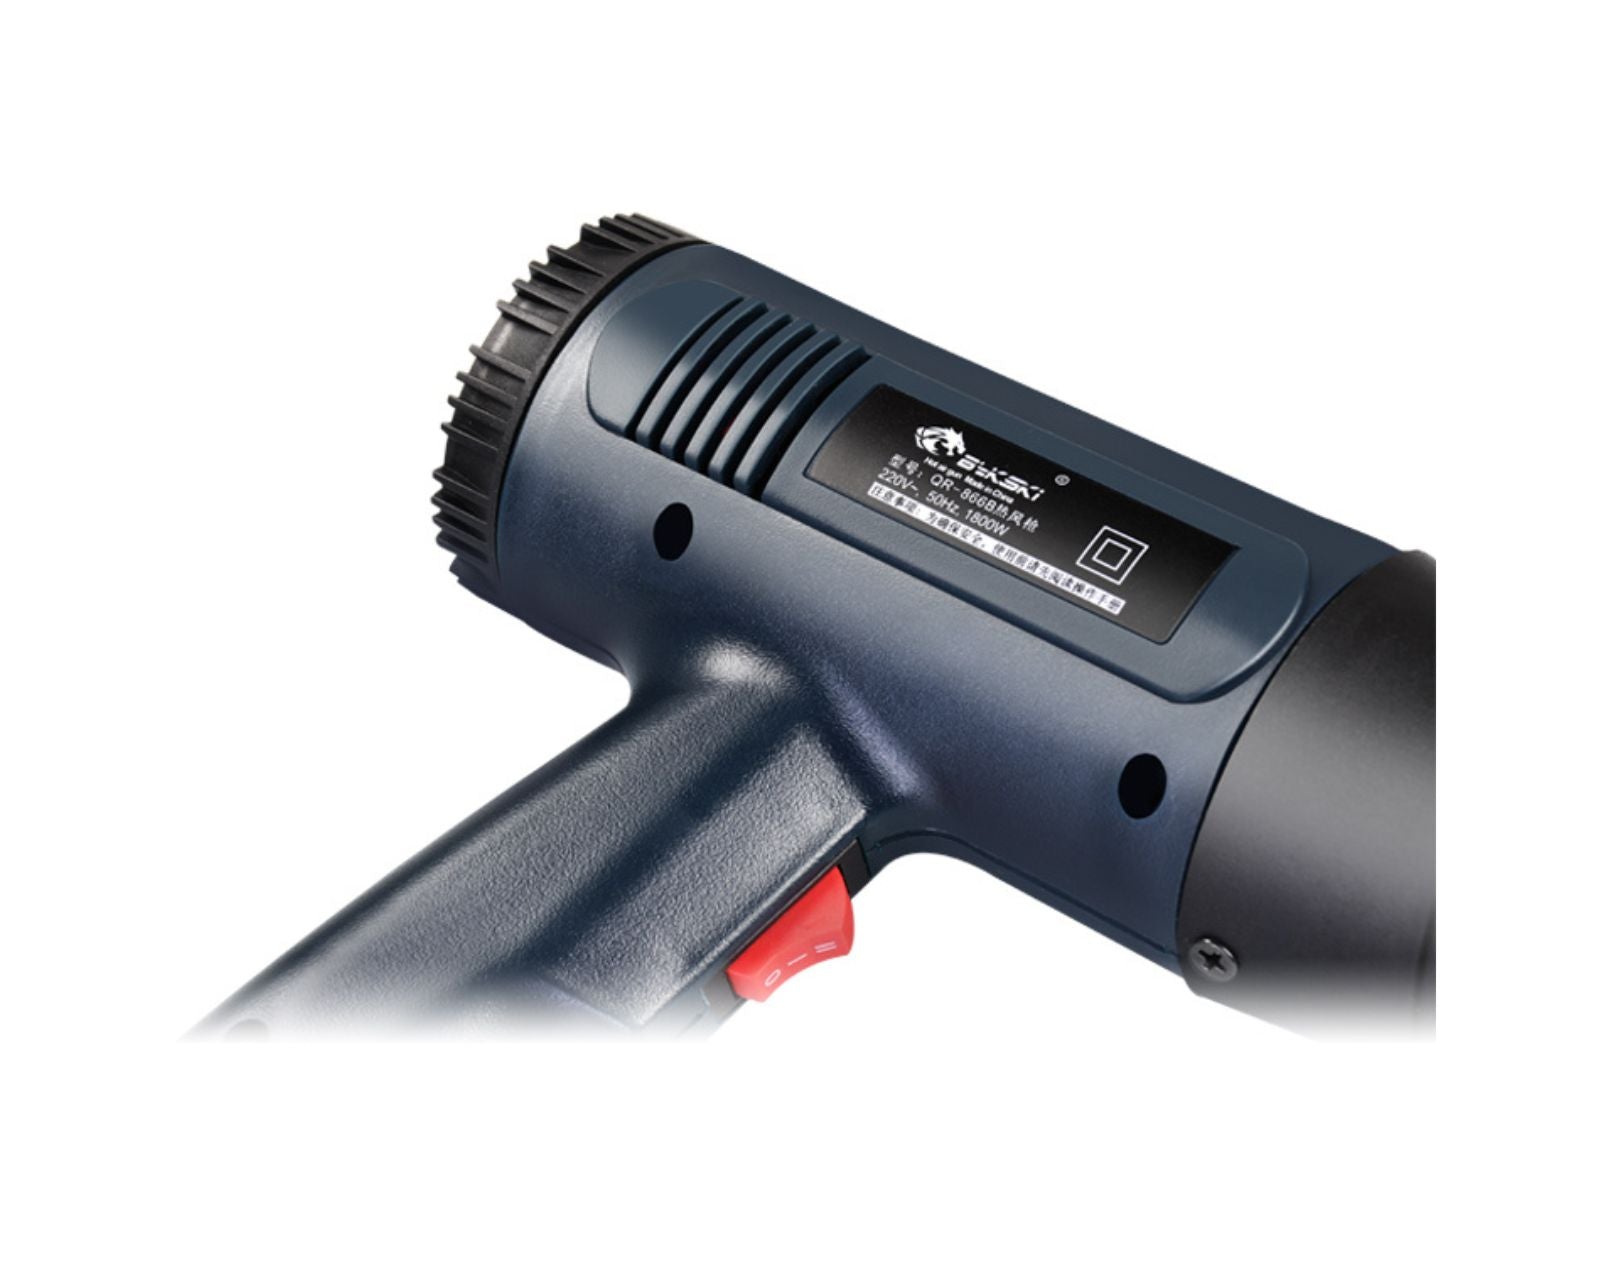 Beauti Craft Heat Gun for Melting Driveway Snow and Silicone Rubber Tape  Hg6617s - China Electric Heat Gun, Portable Heat Gun